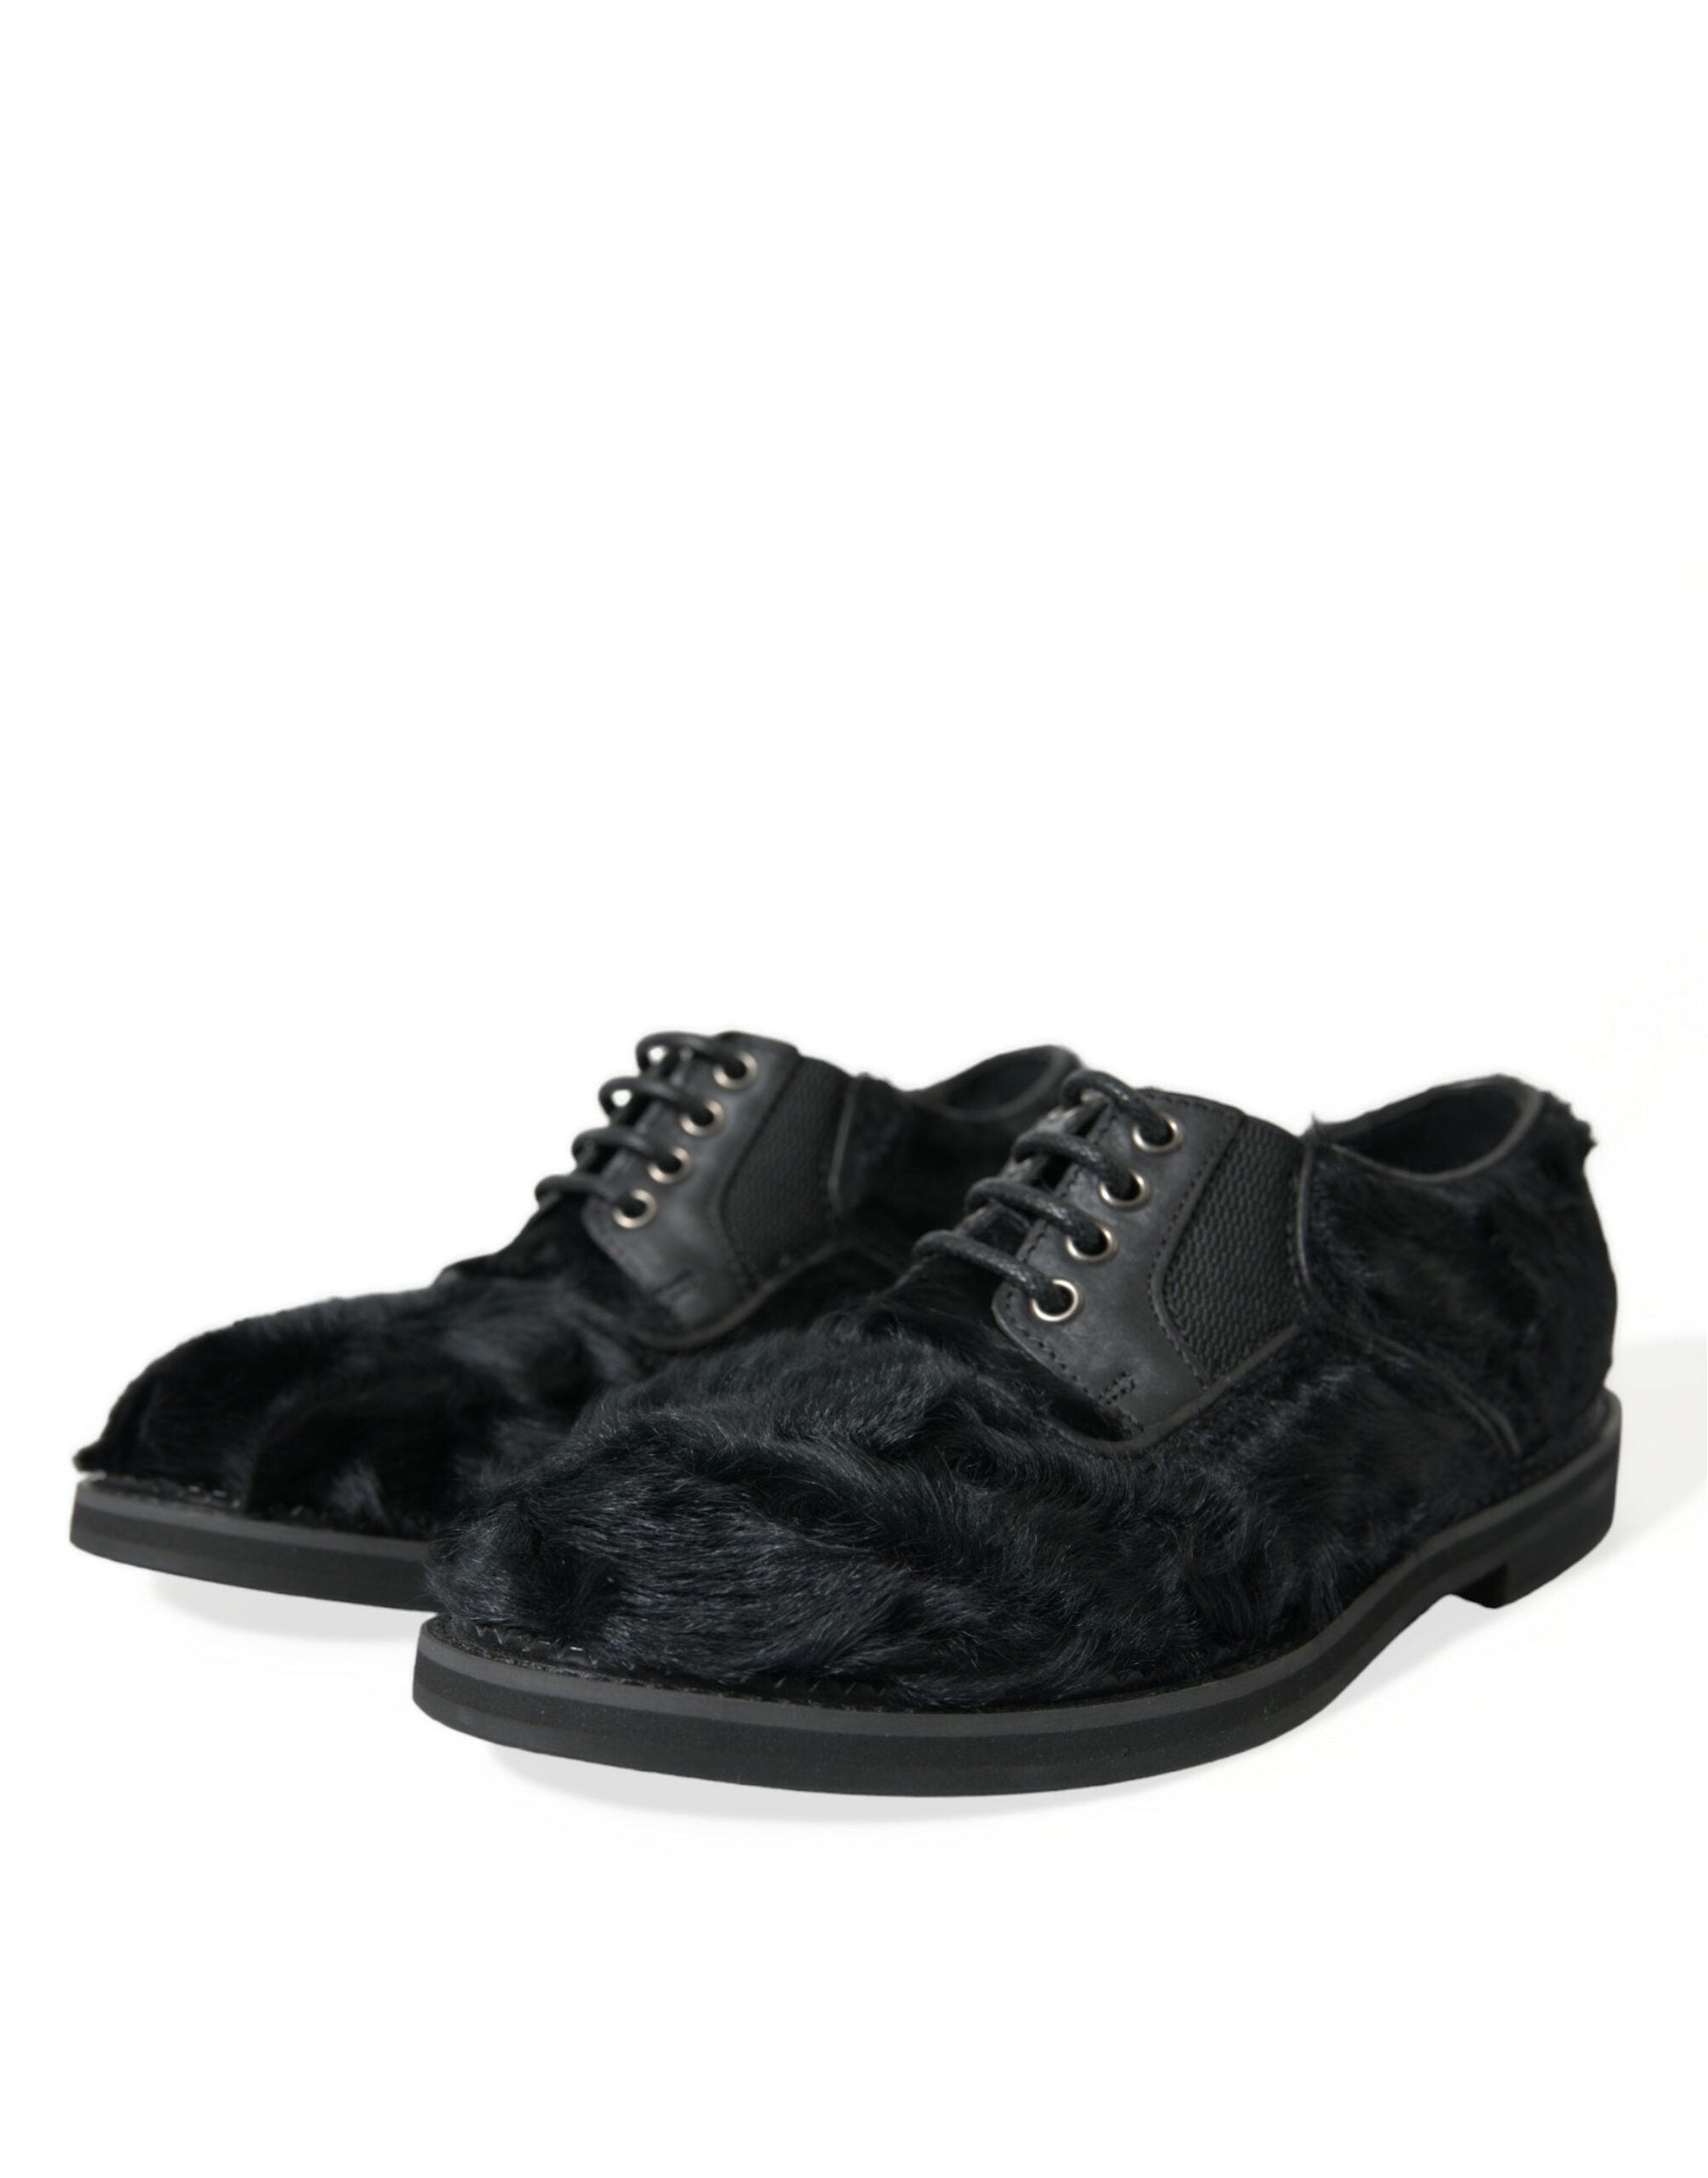 Dolce & Gabbana Black Fur Leather Lace Up Derby Dress Shoes | Fashionsarah.com